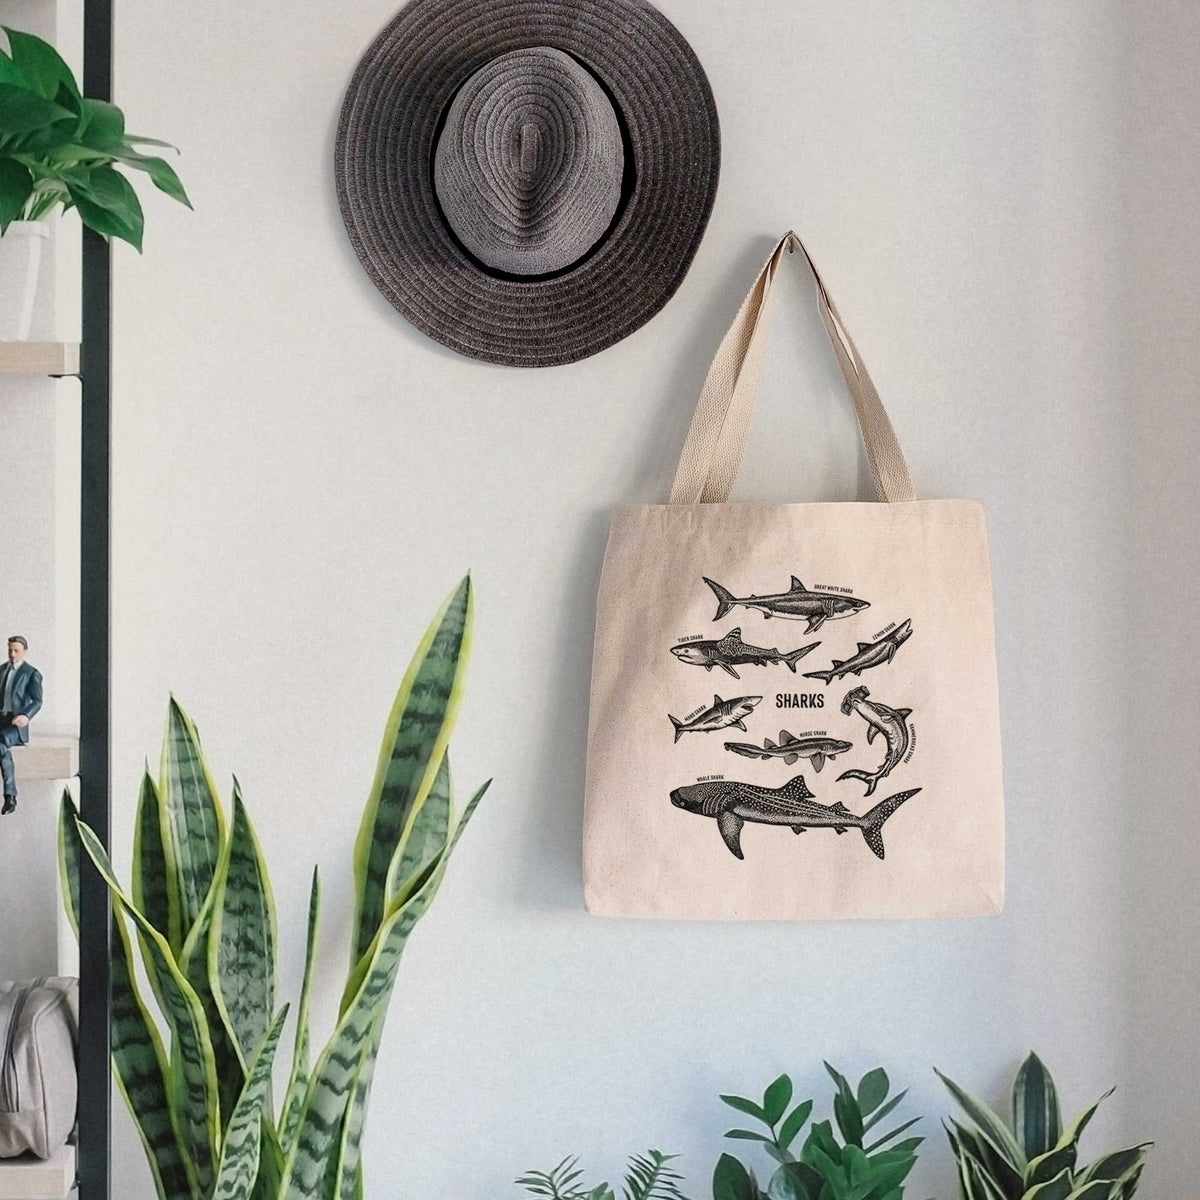 Shark Chart - Tote Bag